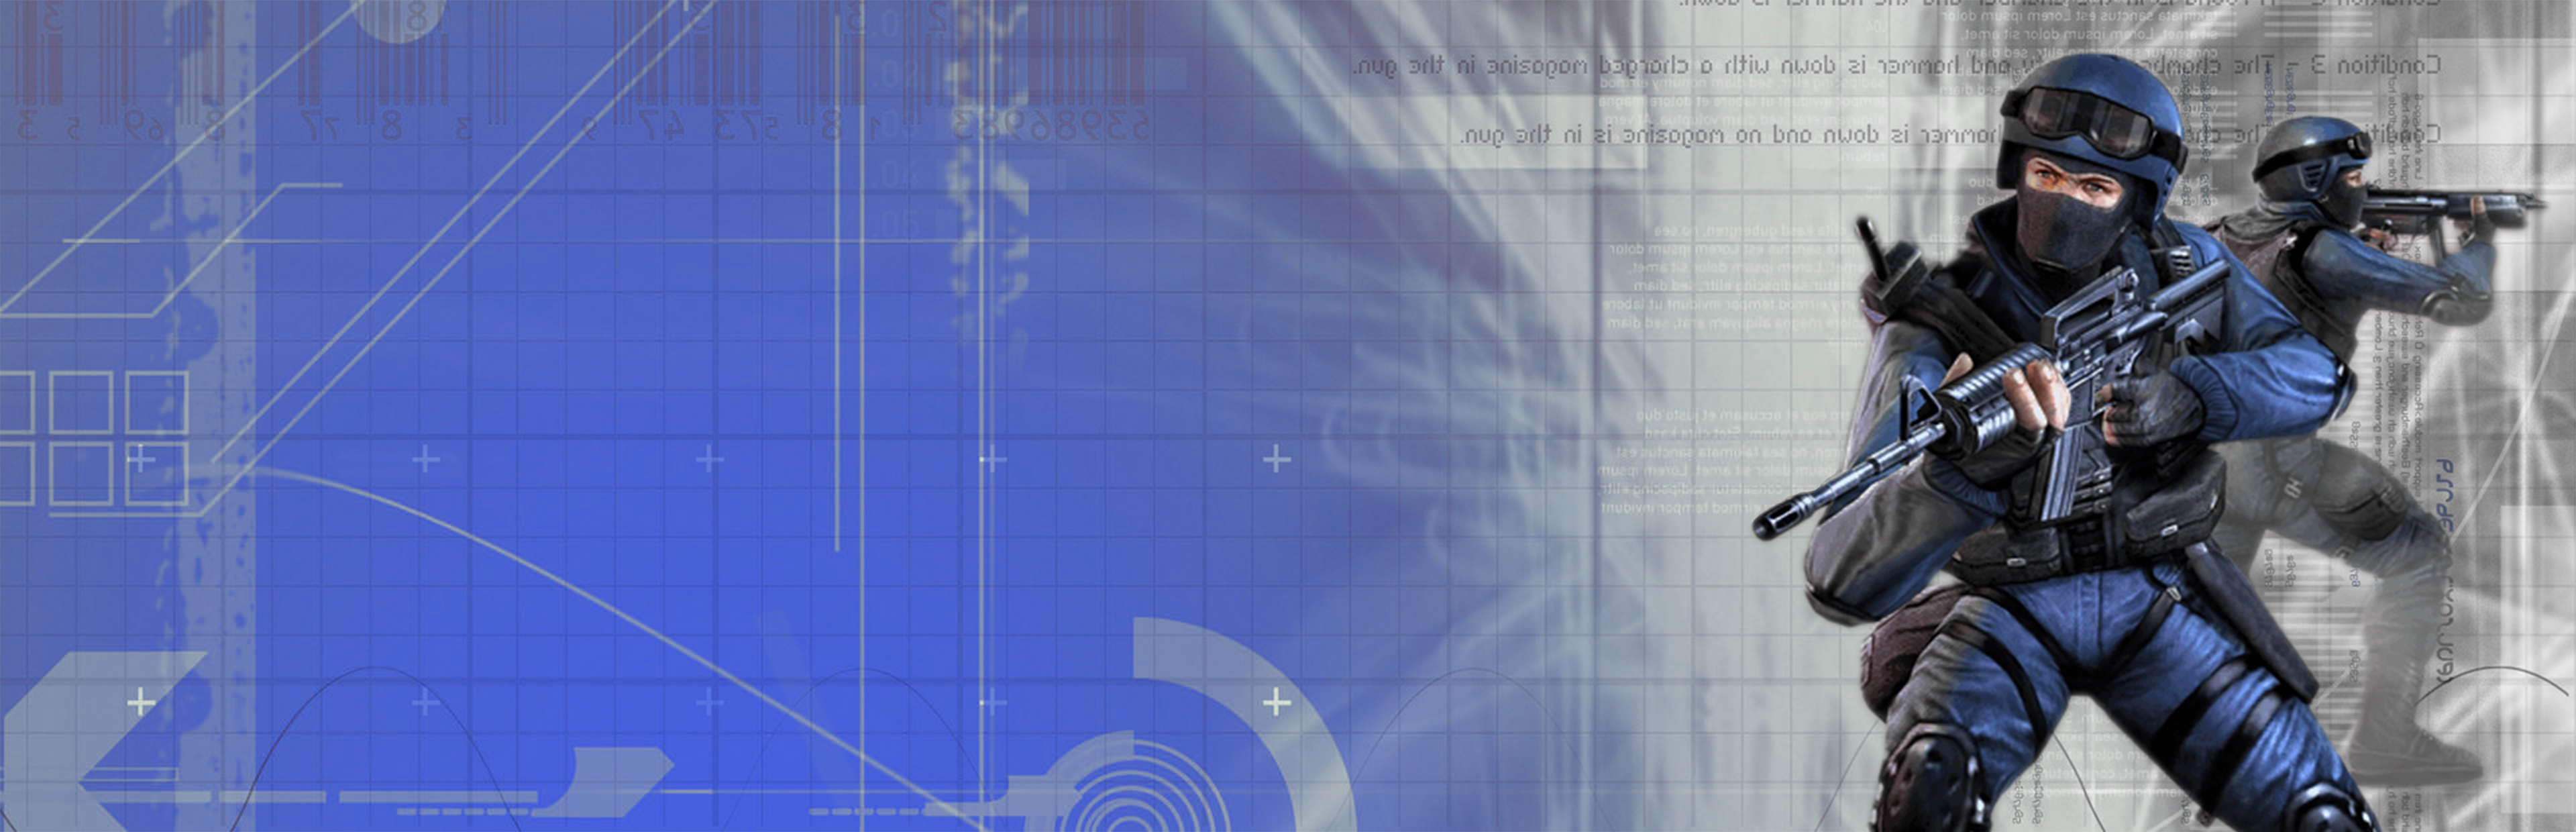 Counter-Strike: Condition Zero - Desktop Wallpapers, Phone